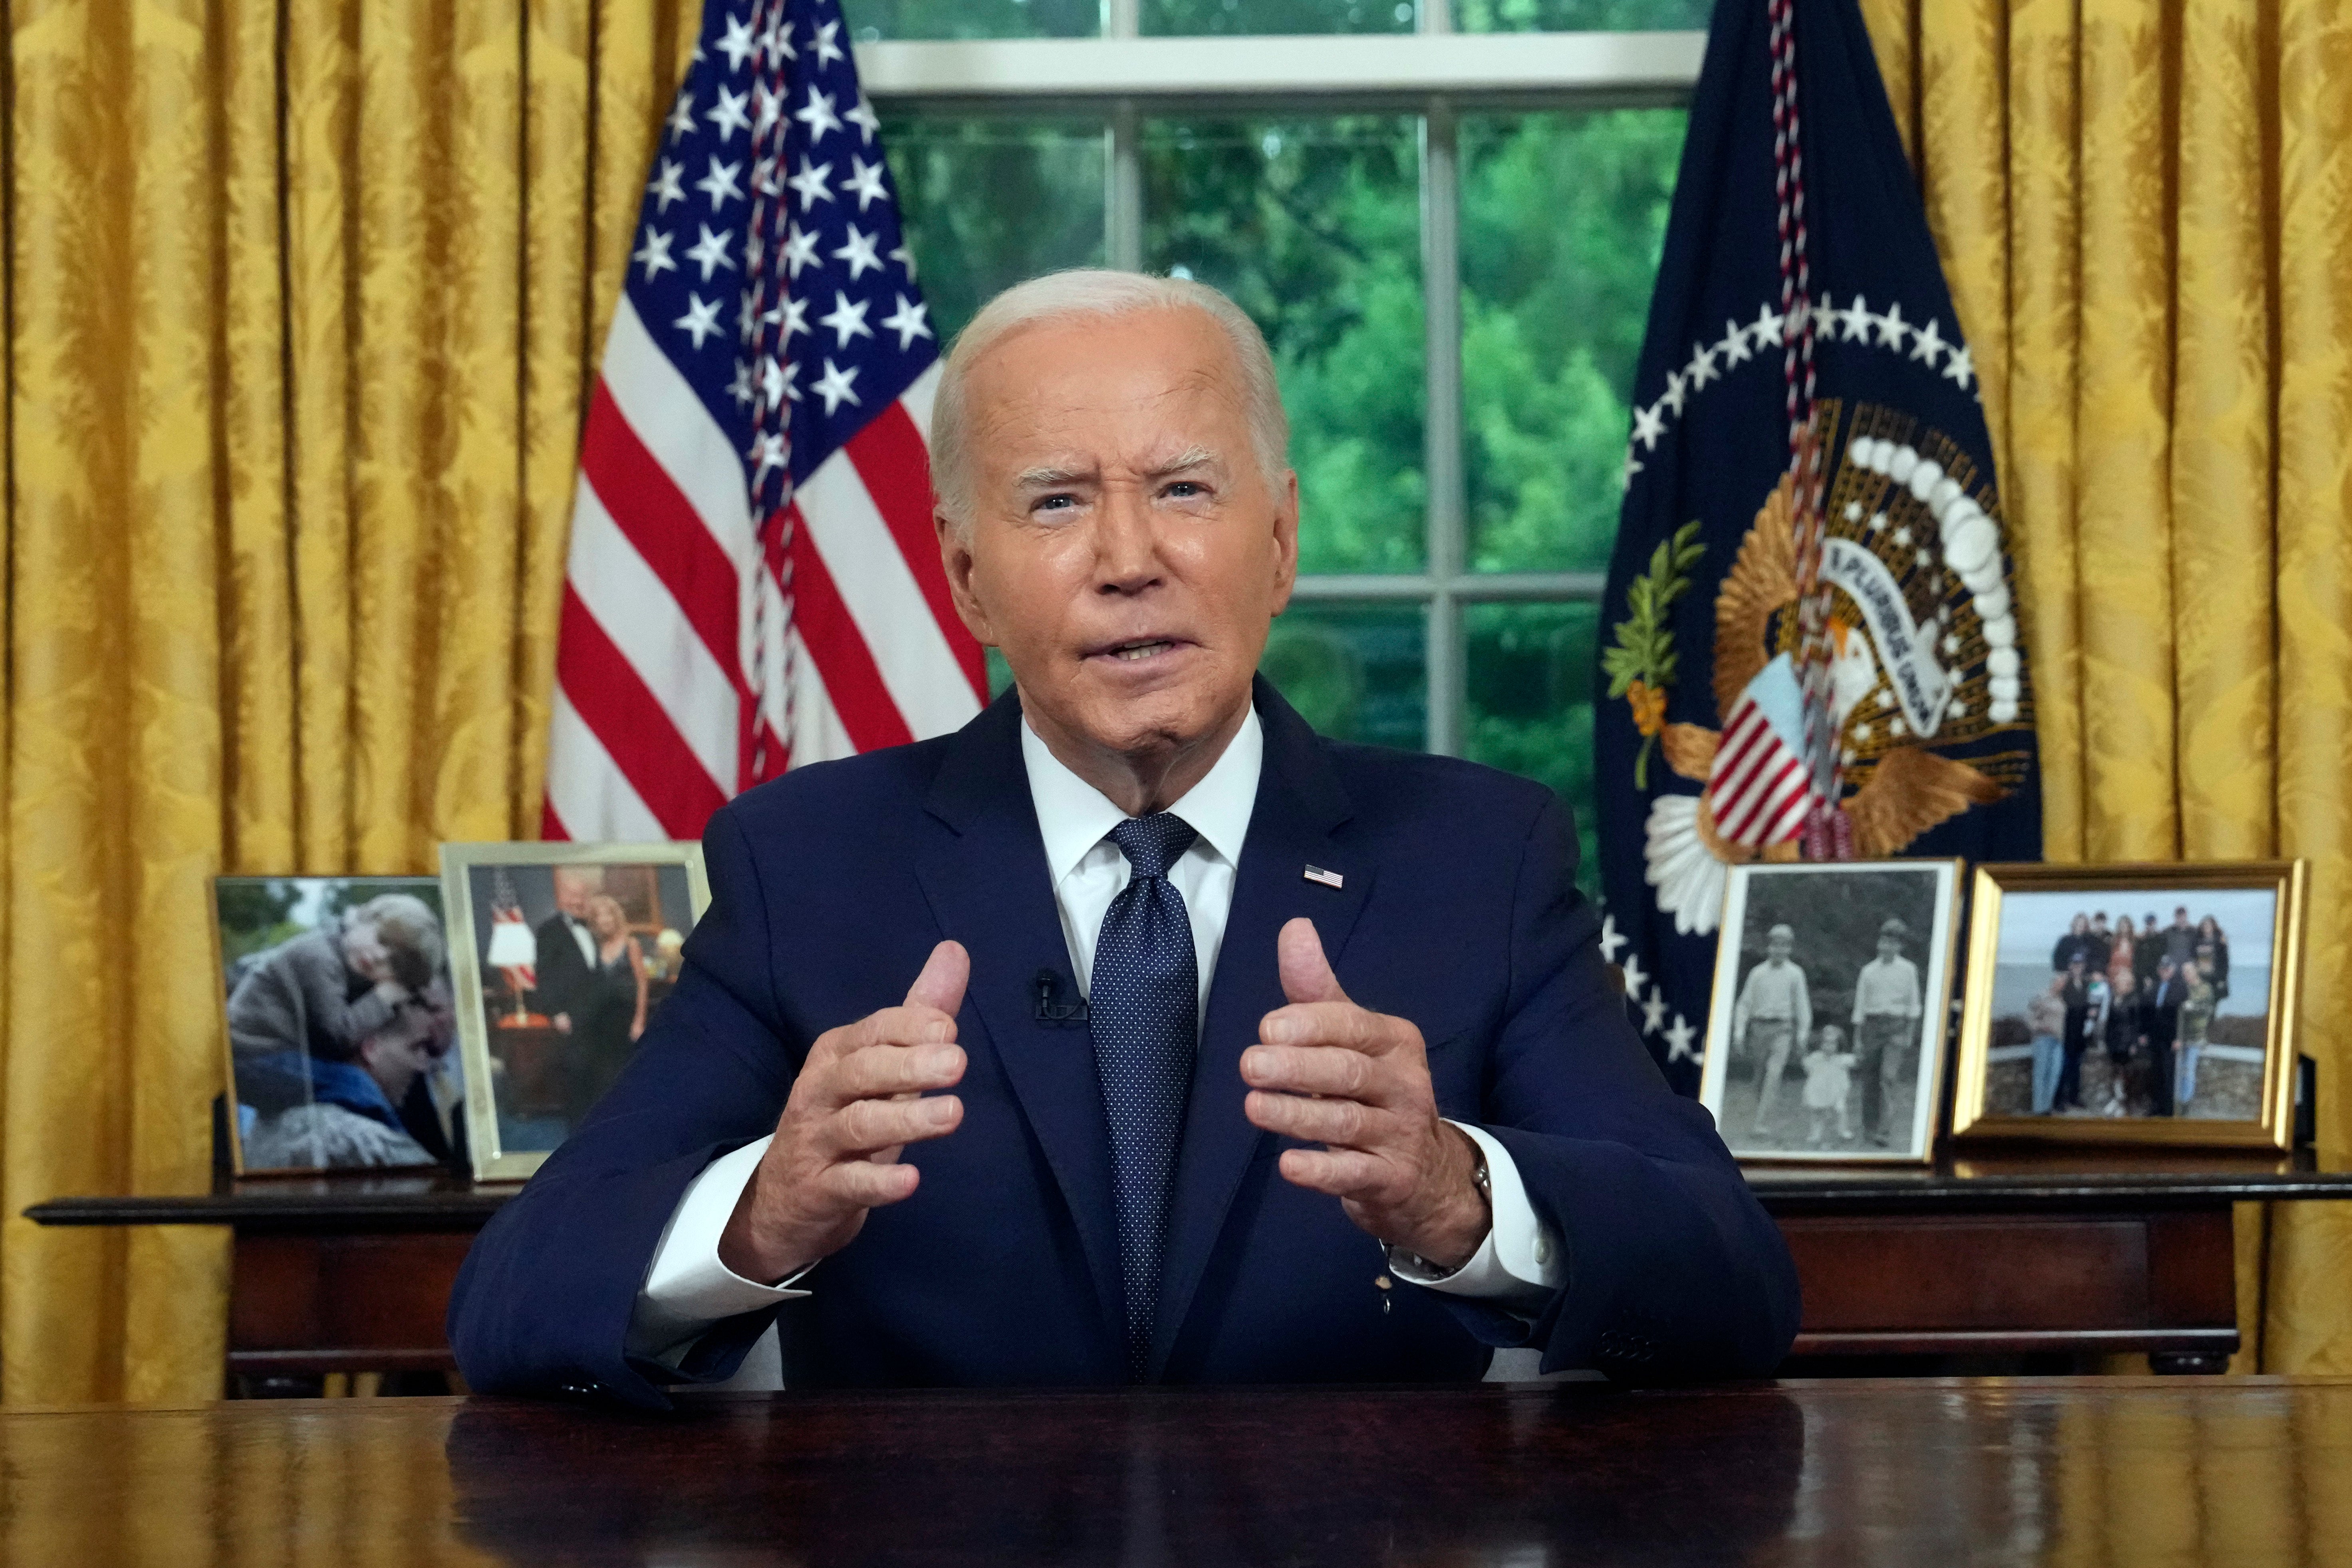 Joe Biden addresses the nation after the assassination attempt on former President Donald Trump